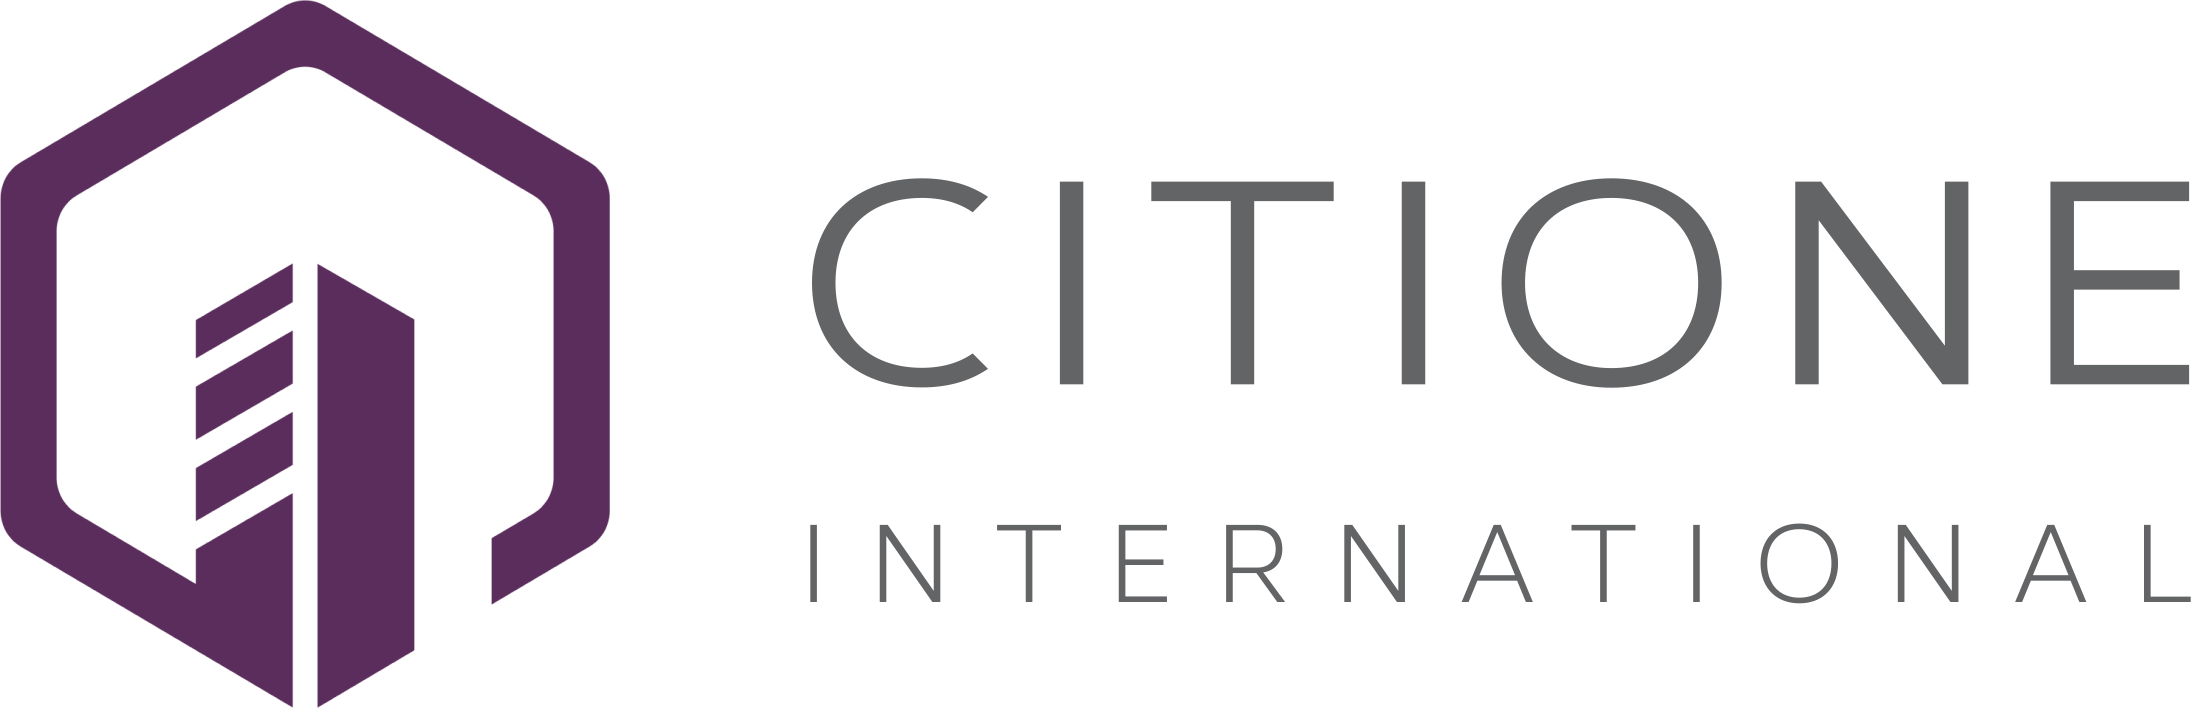 Citione International Pty Ltd - Real Estate Agency